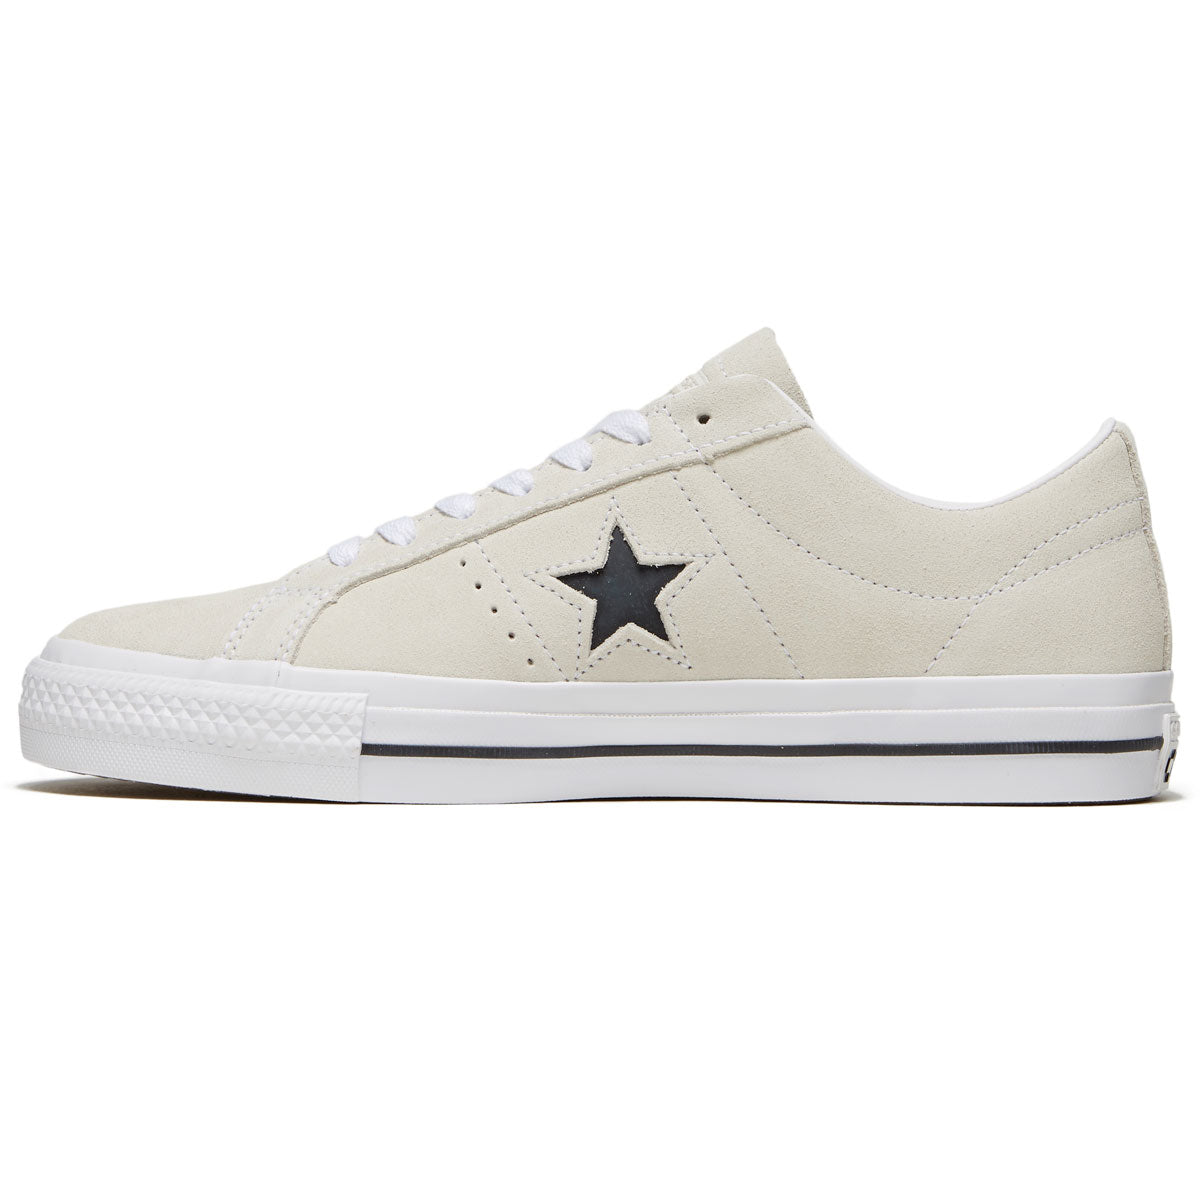 Converse One Star Pro Suede Shoes - Egret/White/Black – Daddies Board Shop